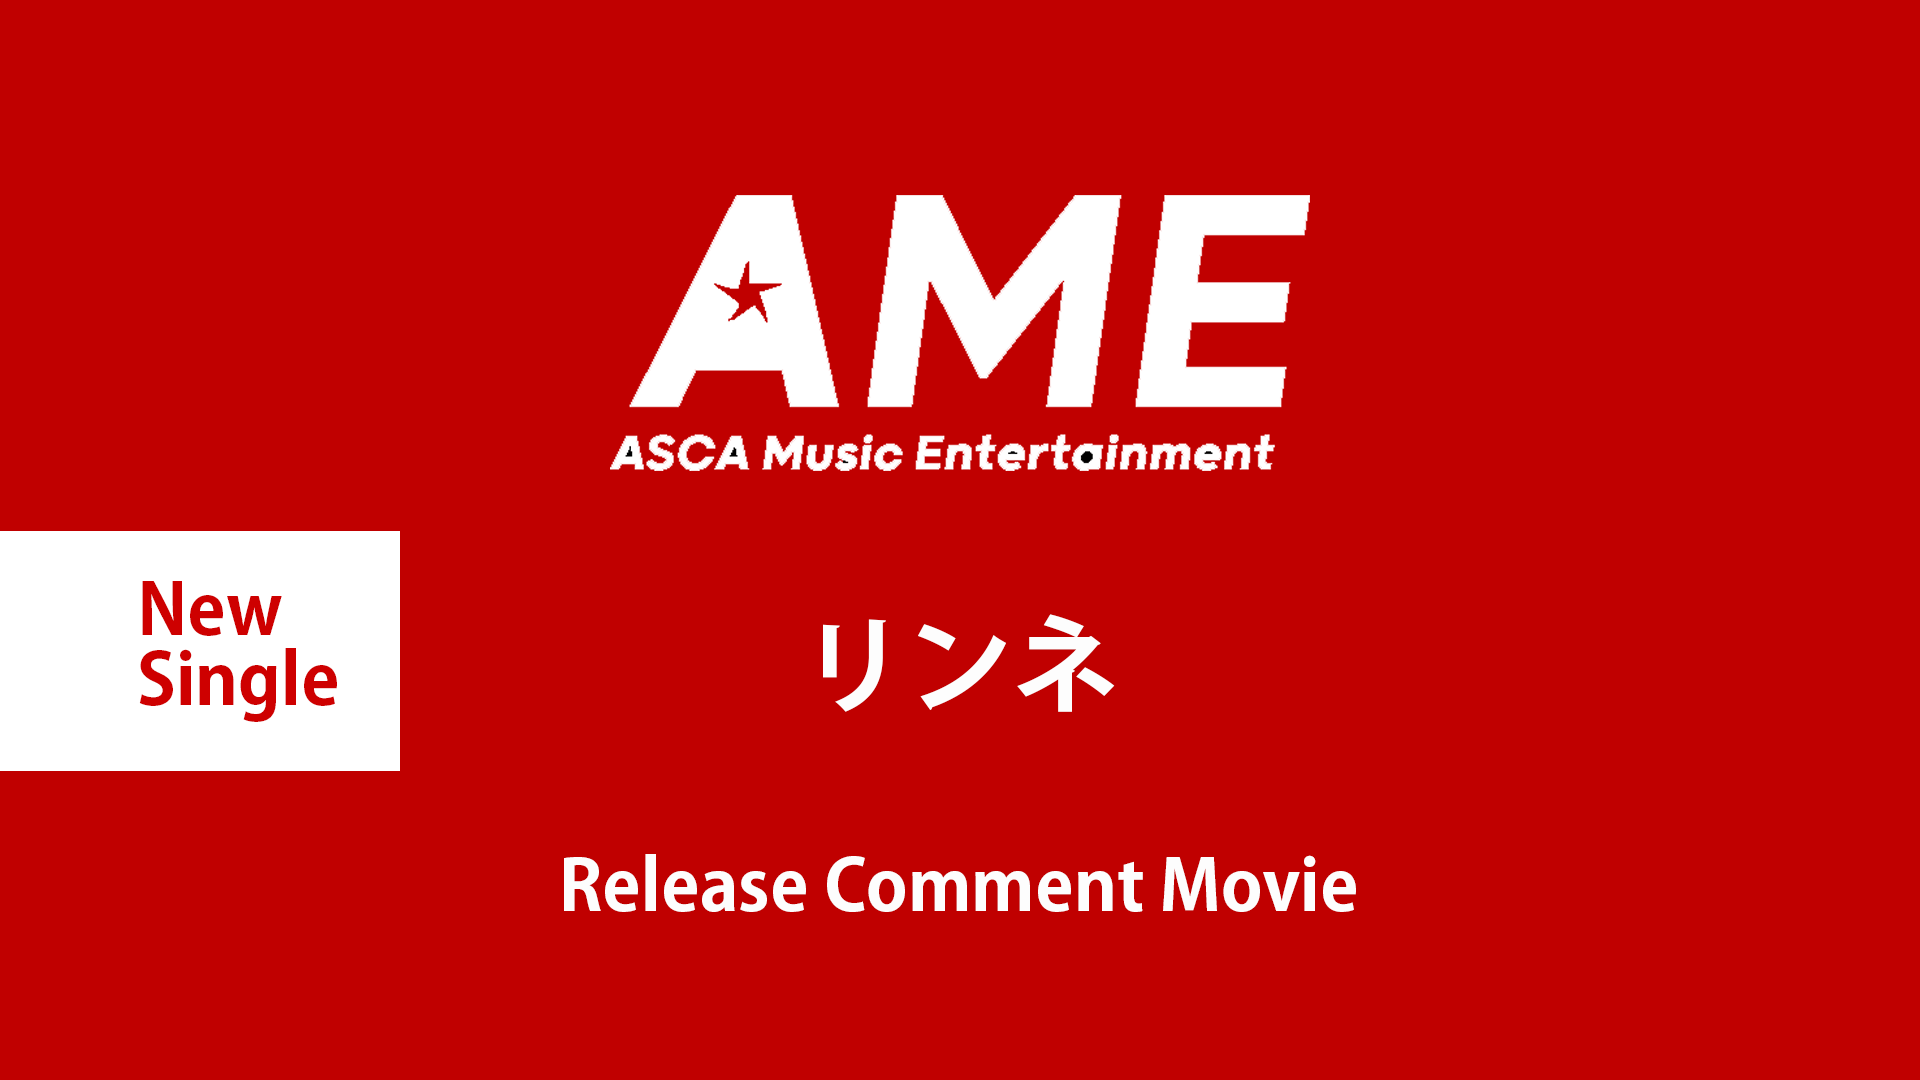 New Single リンネ 特設ページ | ASCA Music Entertainment